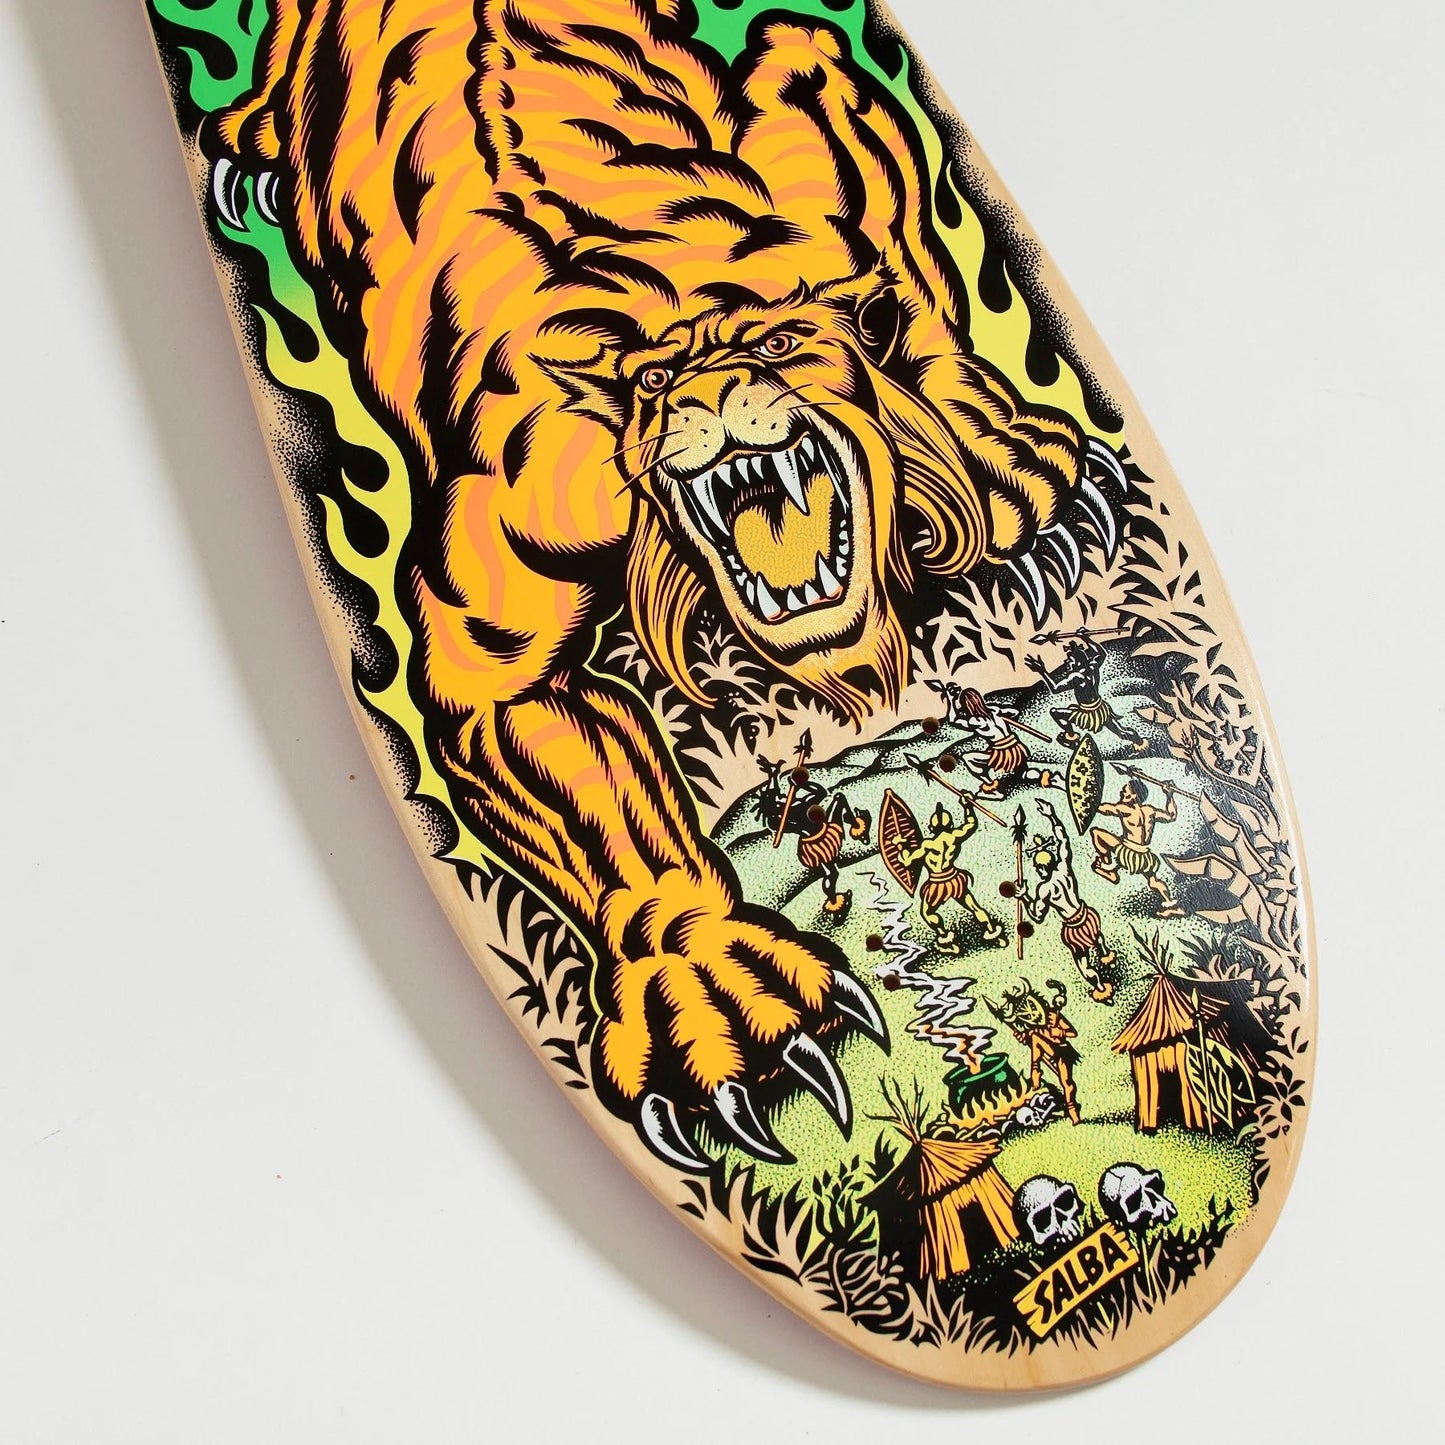 Santa Cruz Salba Tiger reissue deck (10.3" x 31.1") - Tiki Room Skateboards - 3